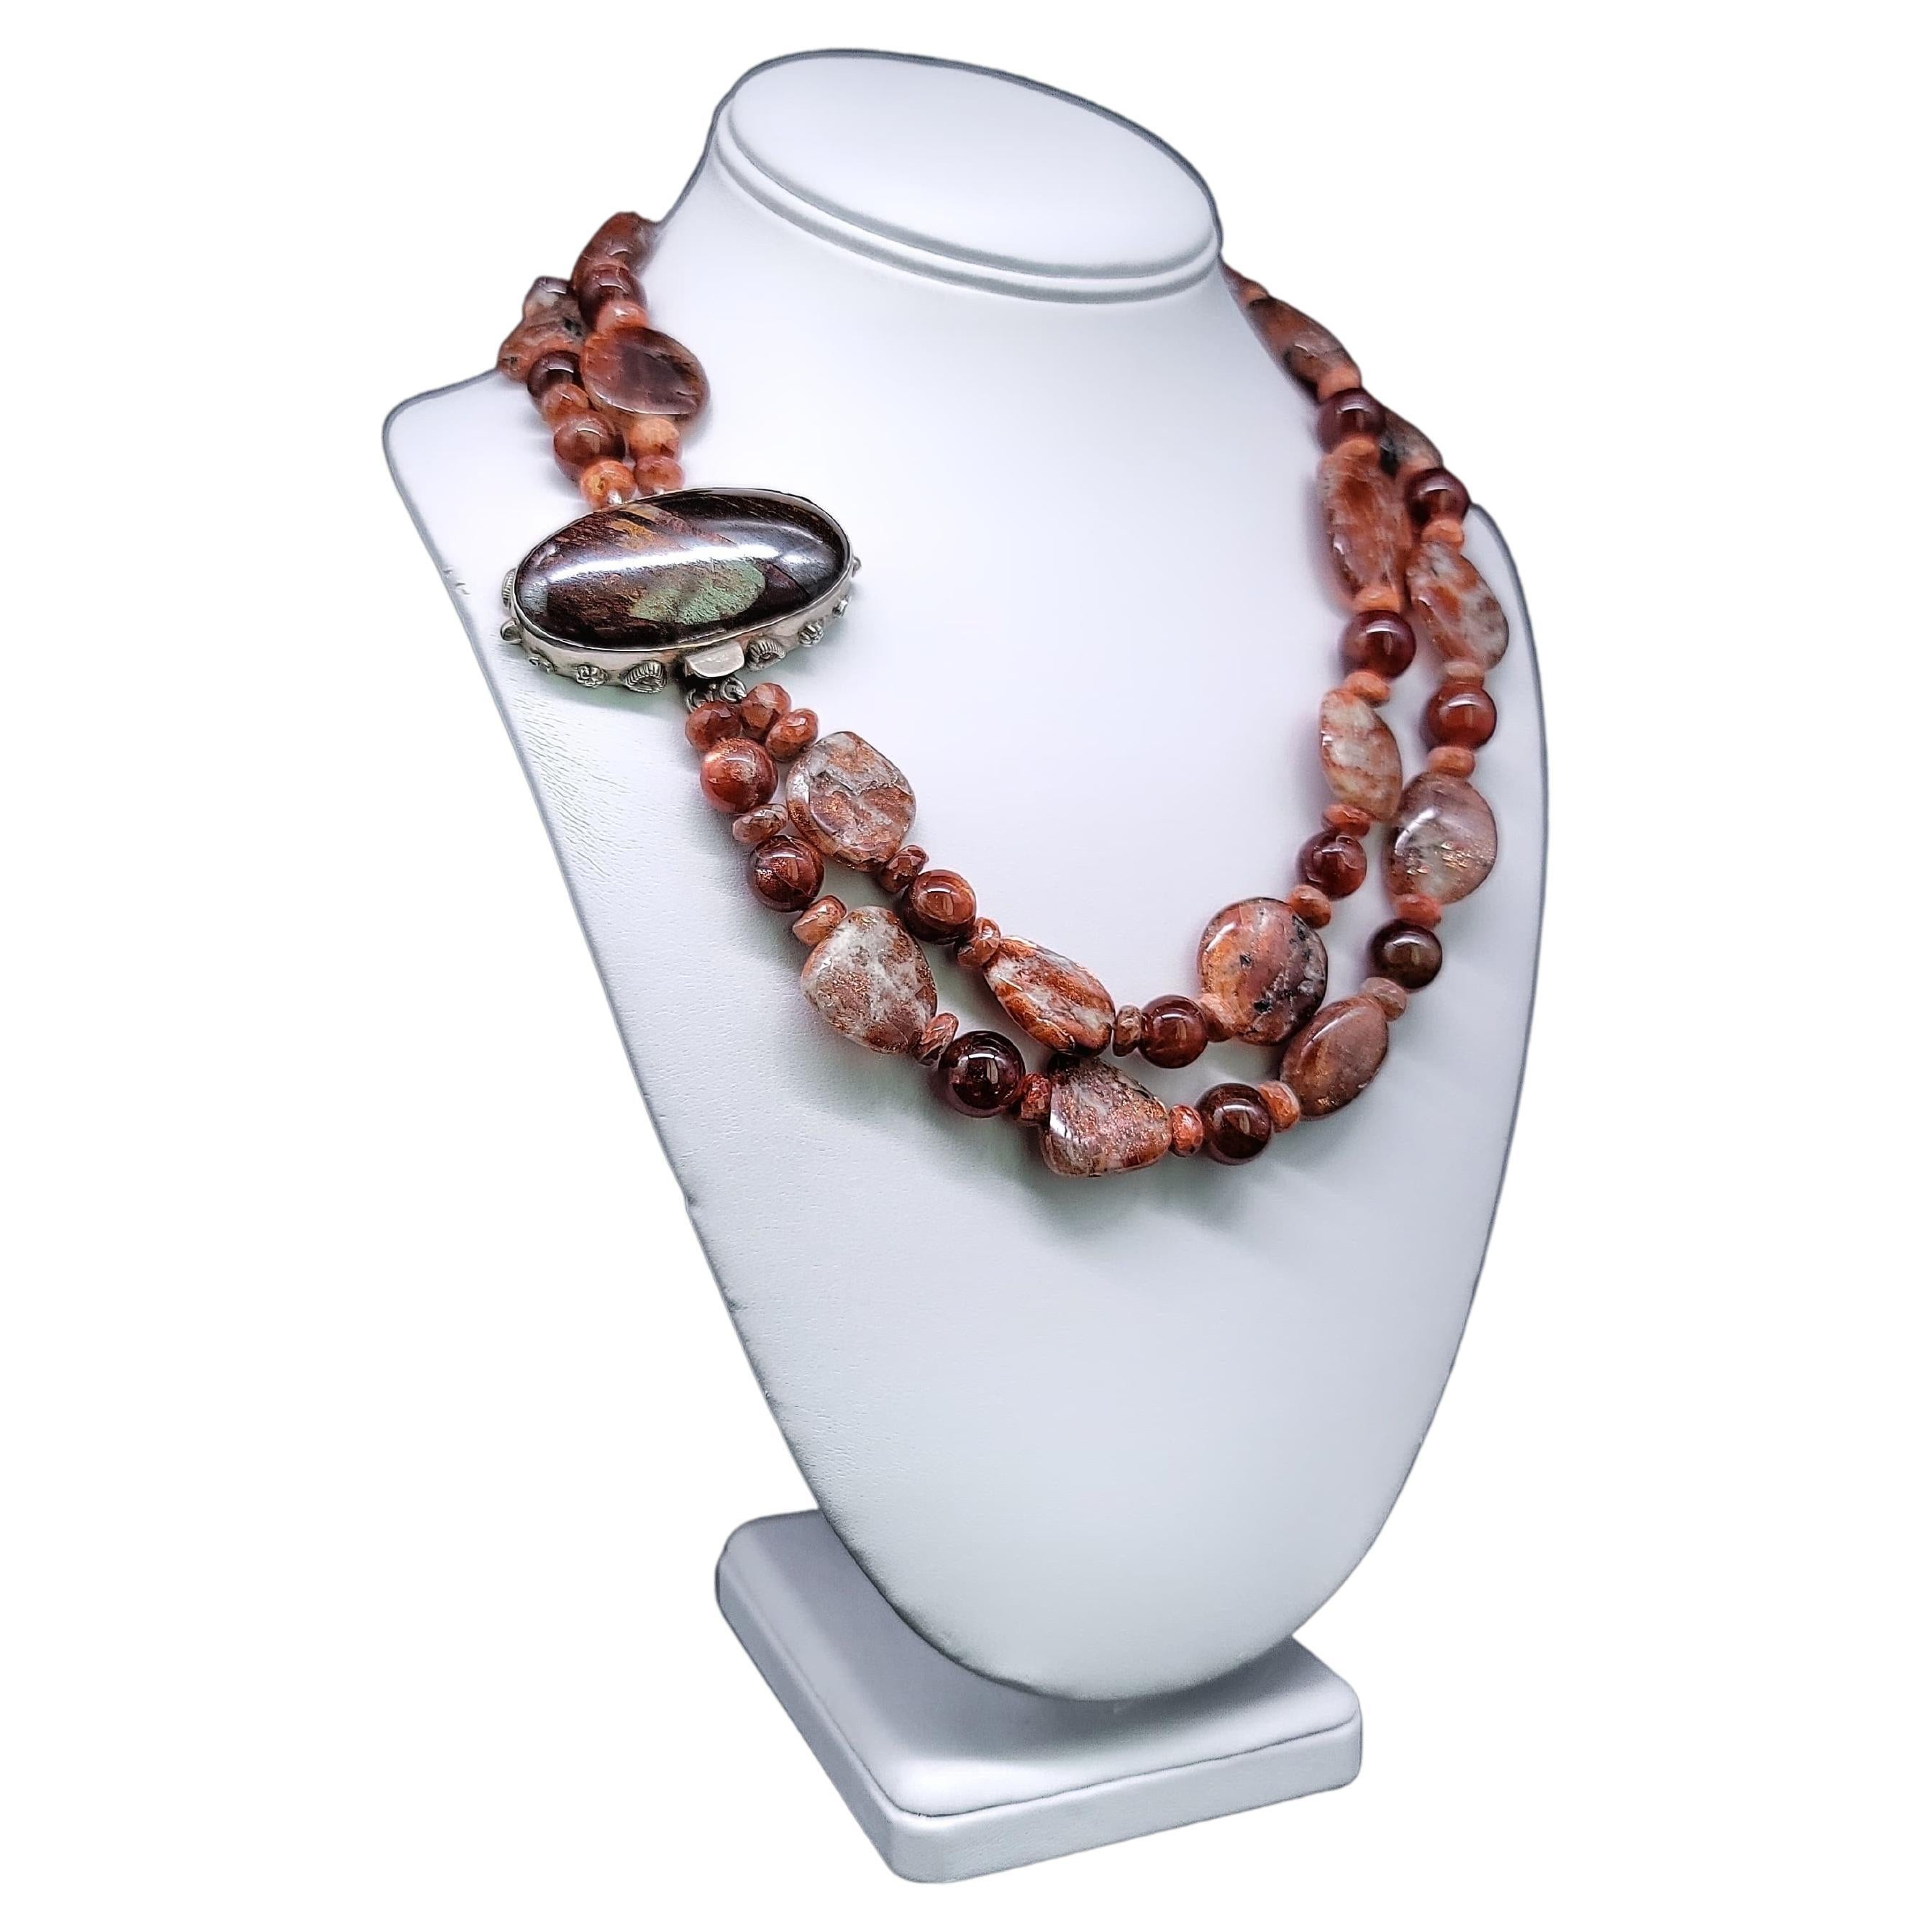 A.Jeschel Radiant Sunstone Specimen necklace.